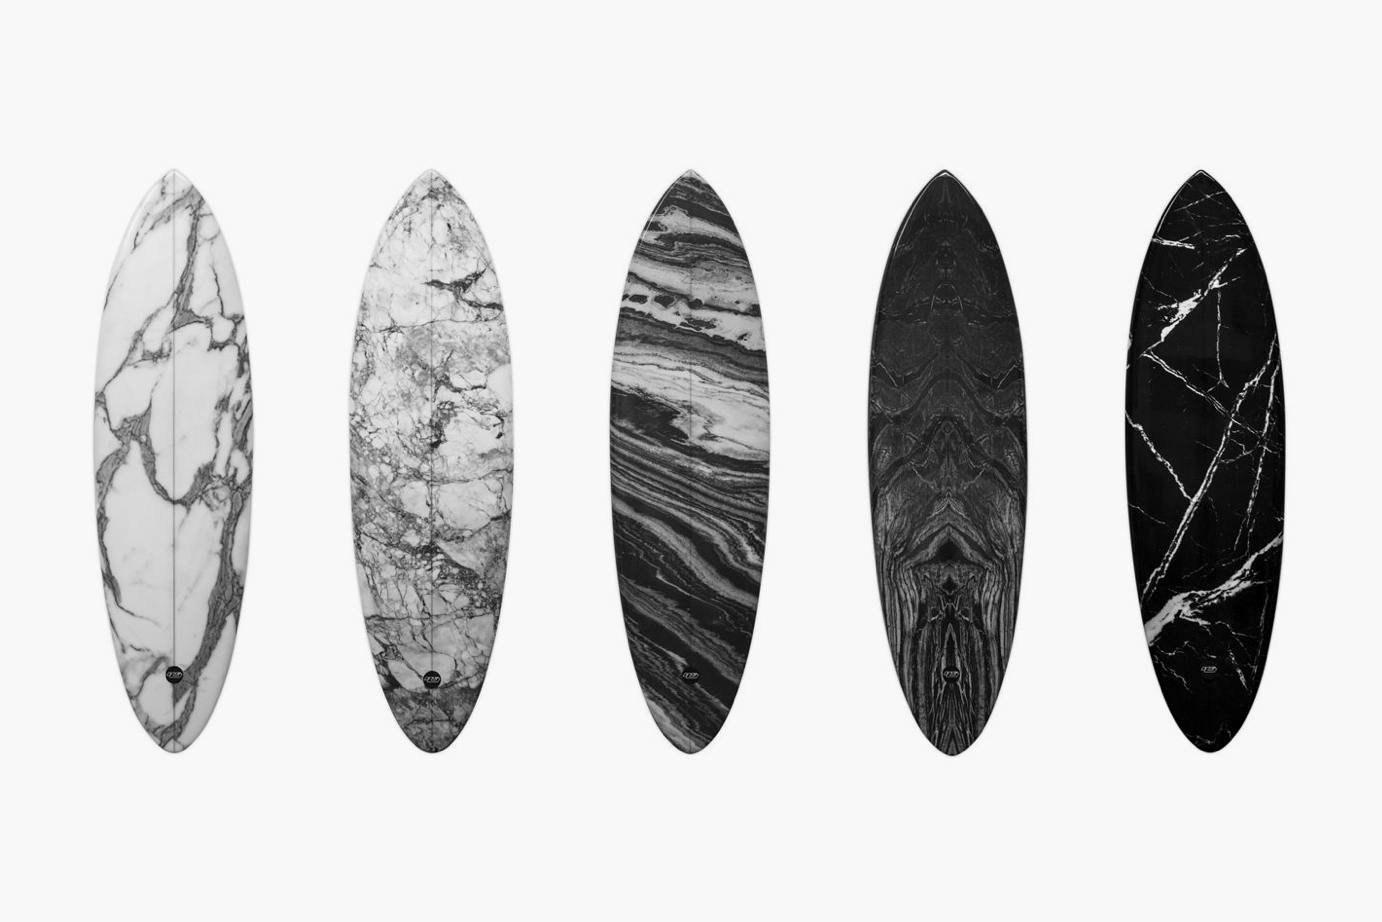 alexander-wang-x-haydenshapes-summer-2014-hypto-krypto-marble-surfboards-01